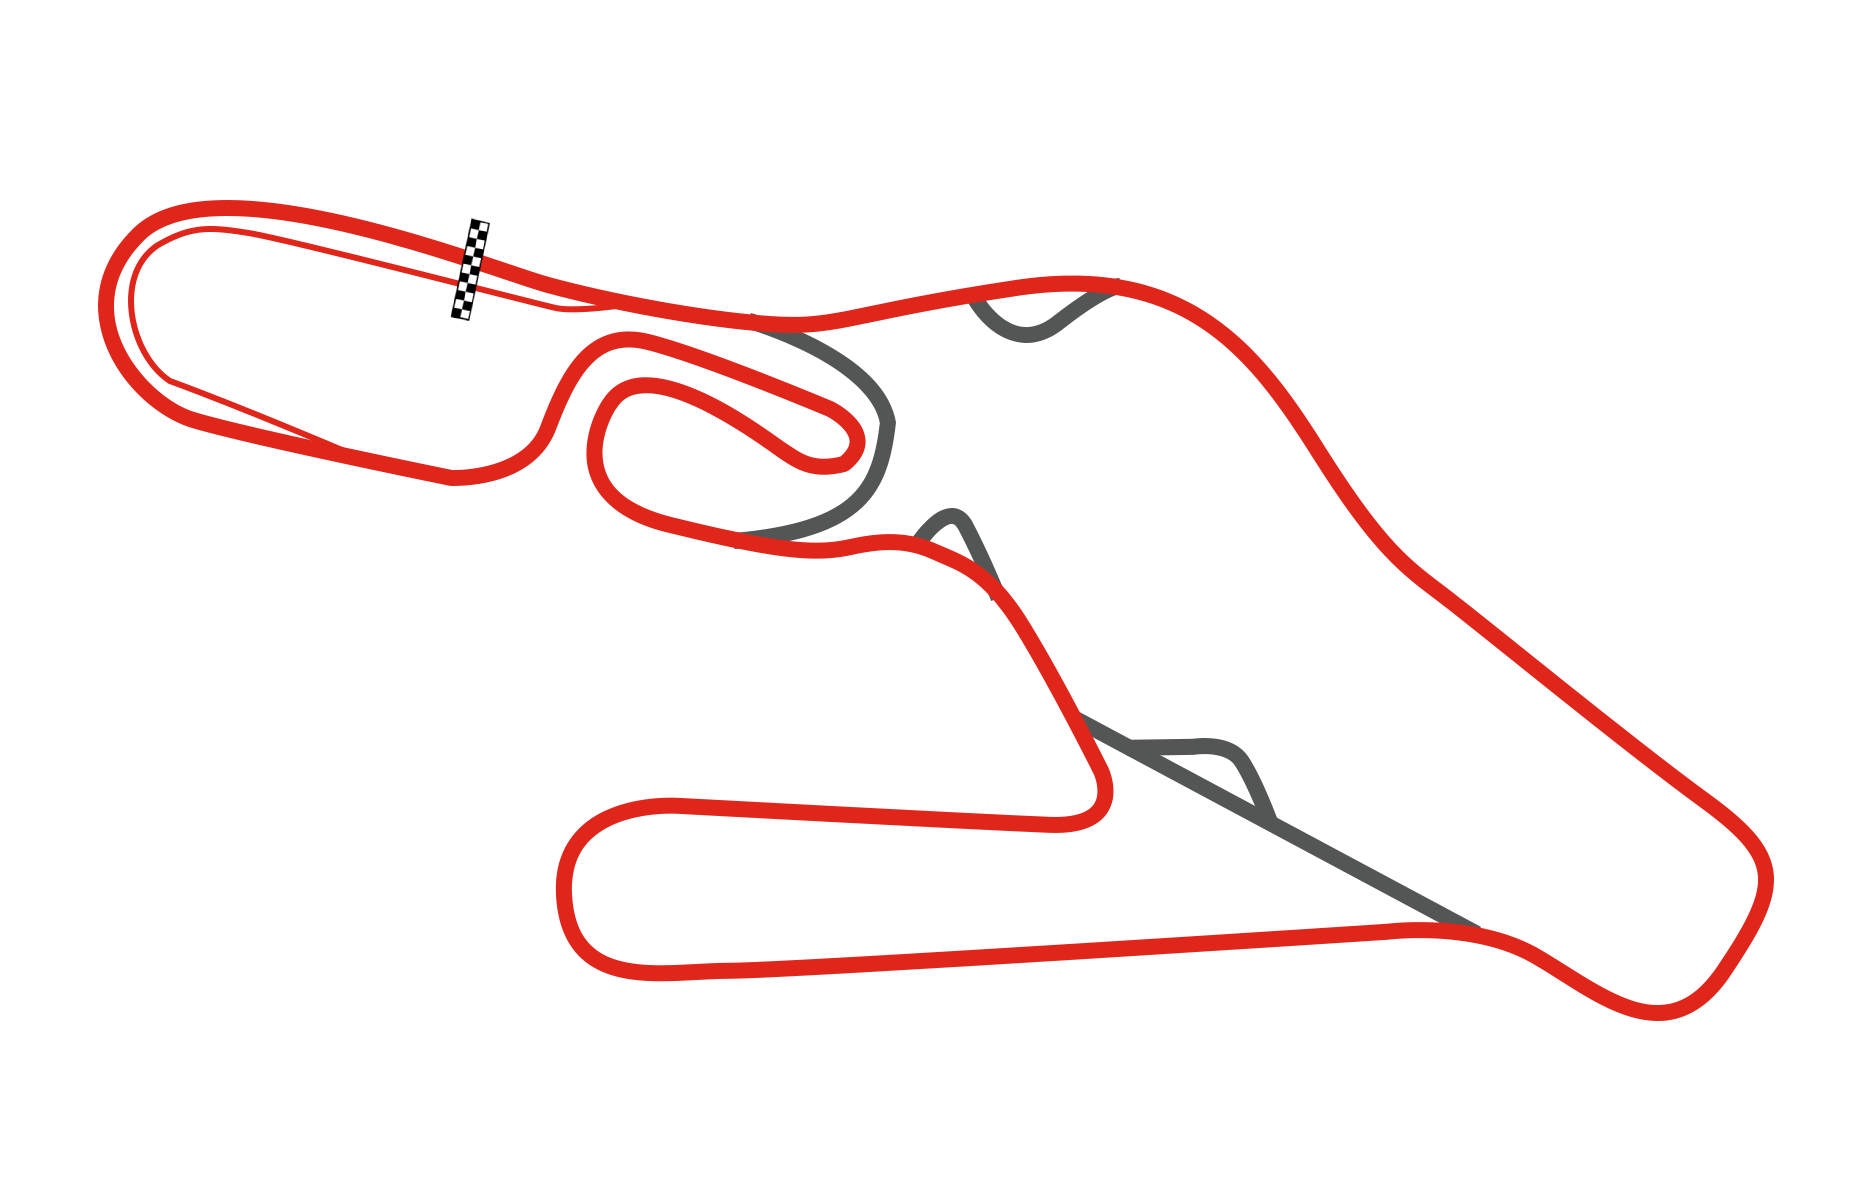 ACI 발레룽가 서킷(ACI Vallelunga Circuit)